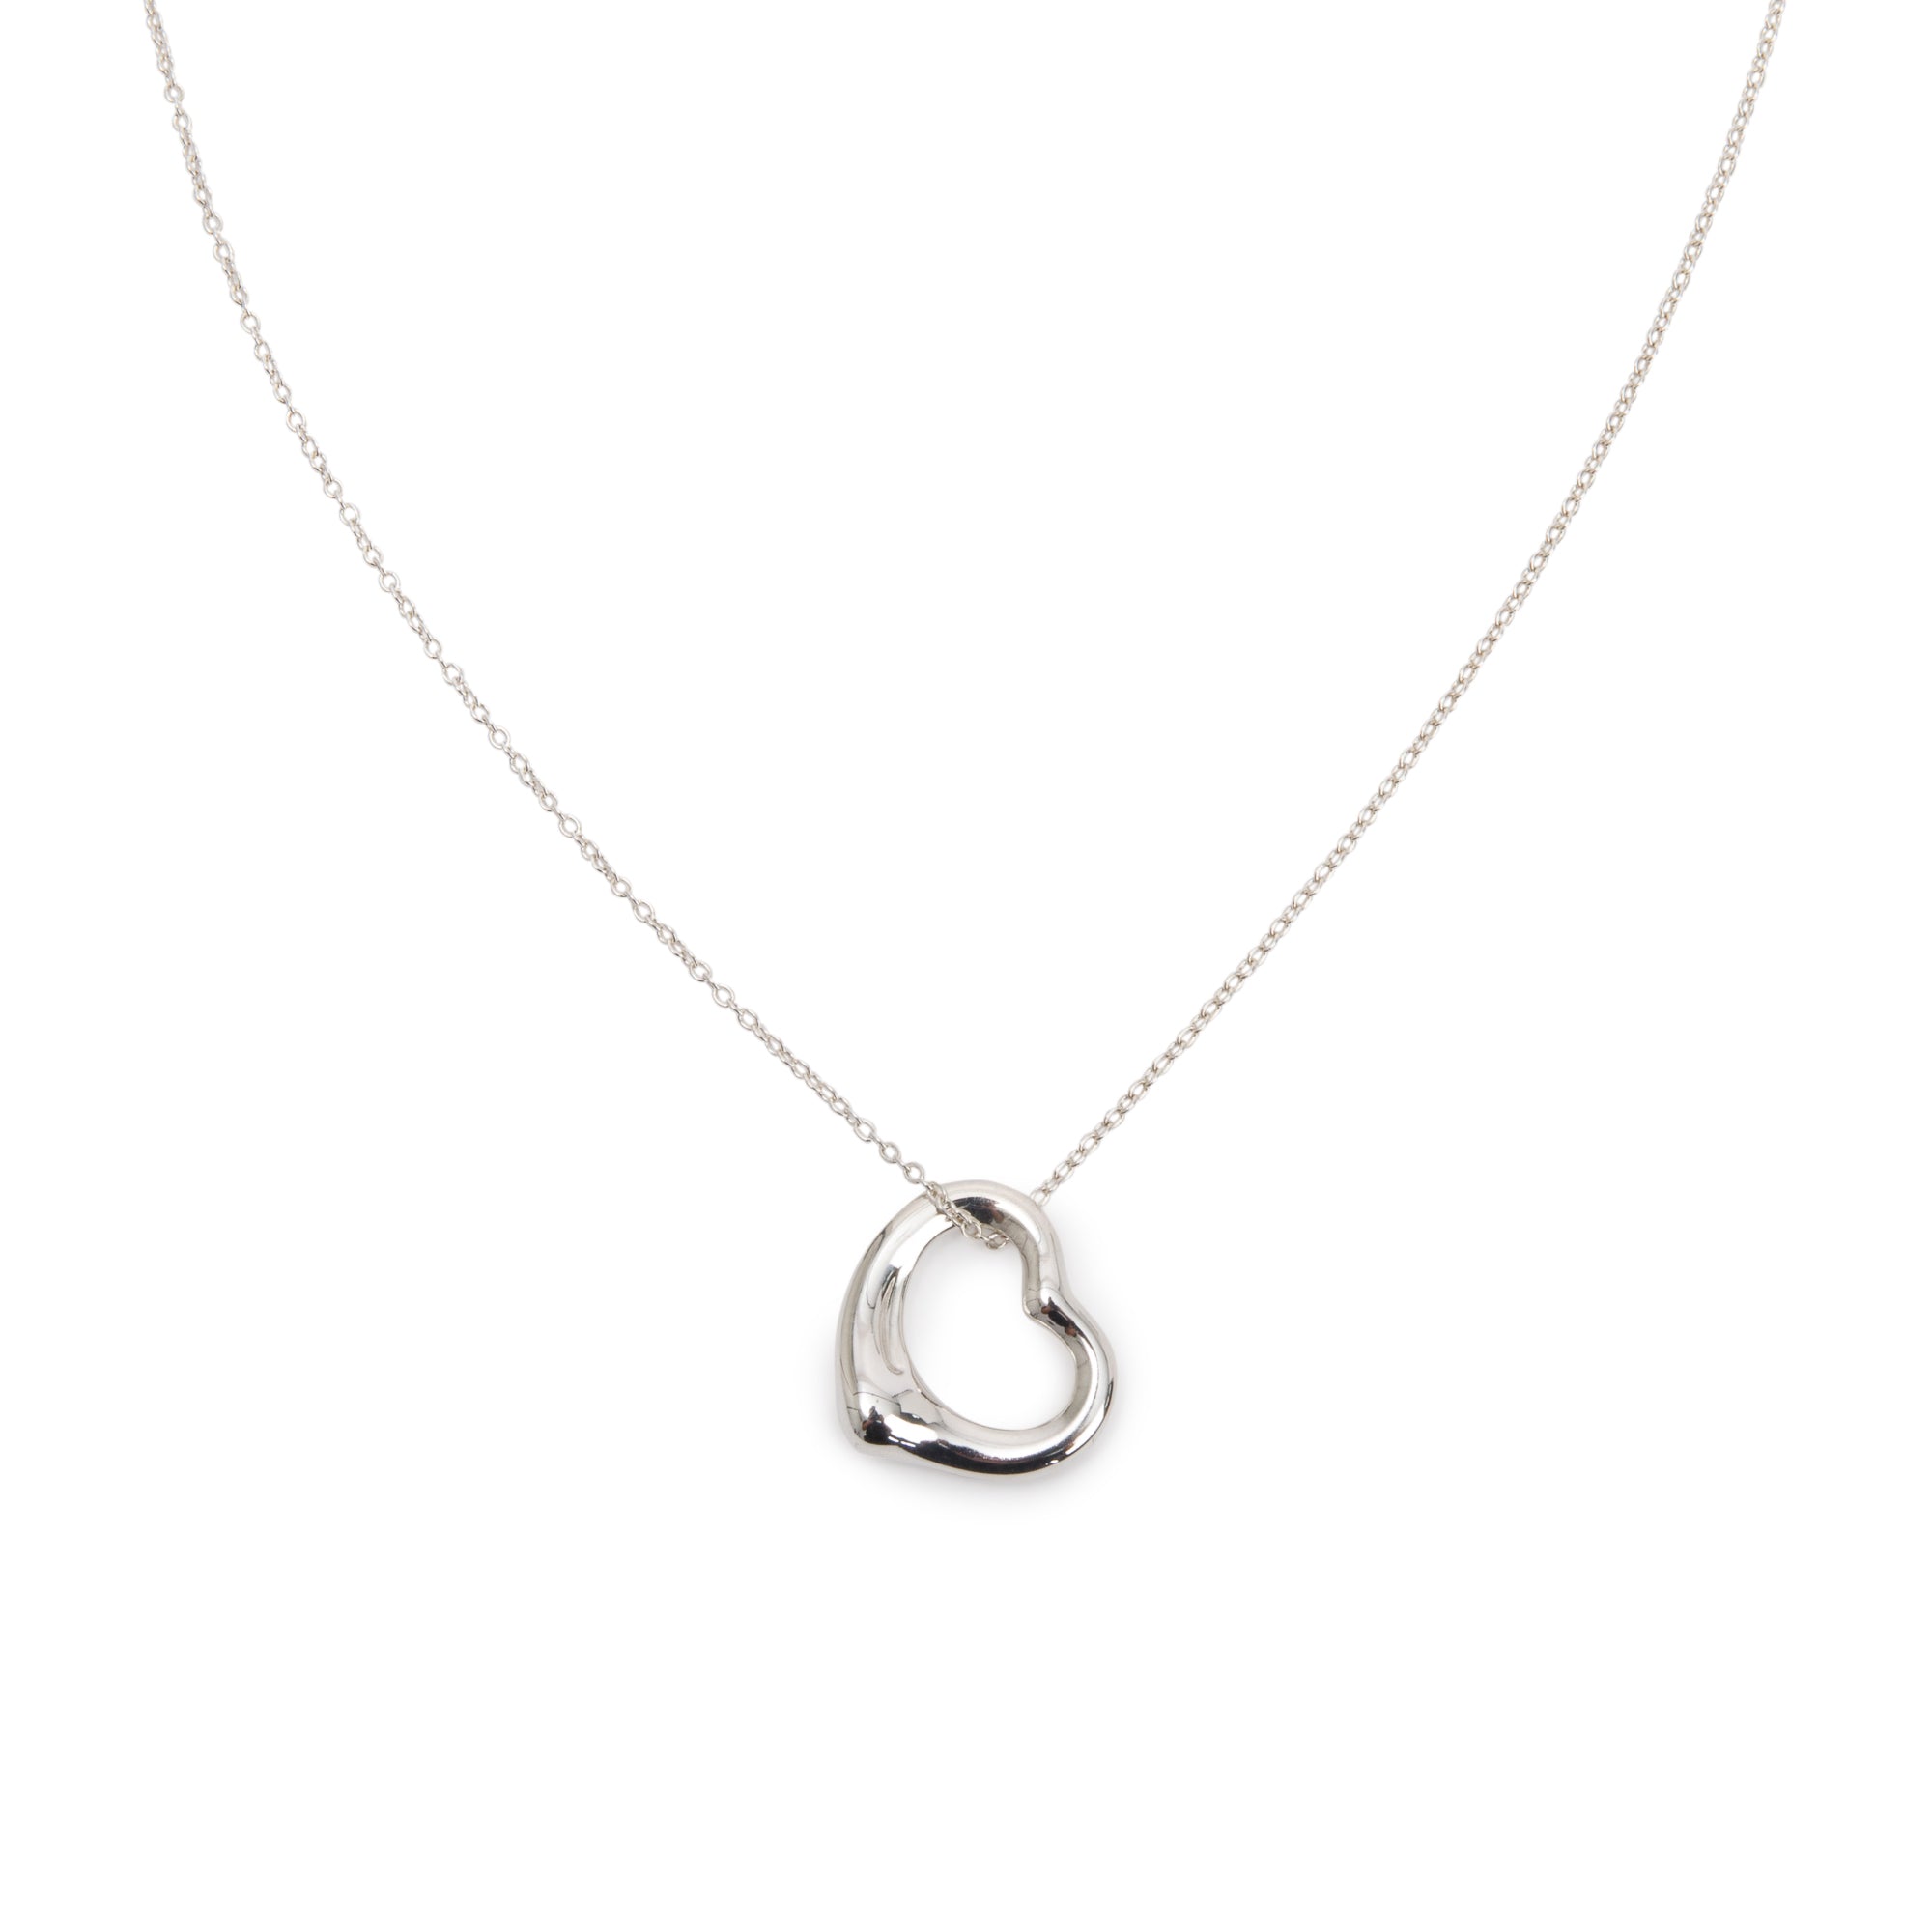 Authentic Tiffany & Co. Open Heart Necklace #260-004-633-7320 | eBay